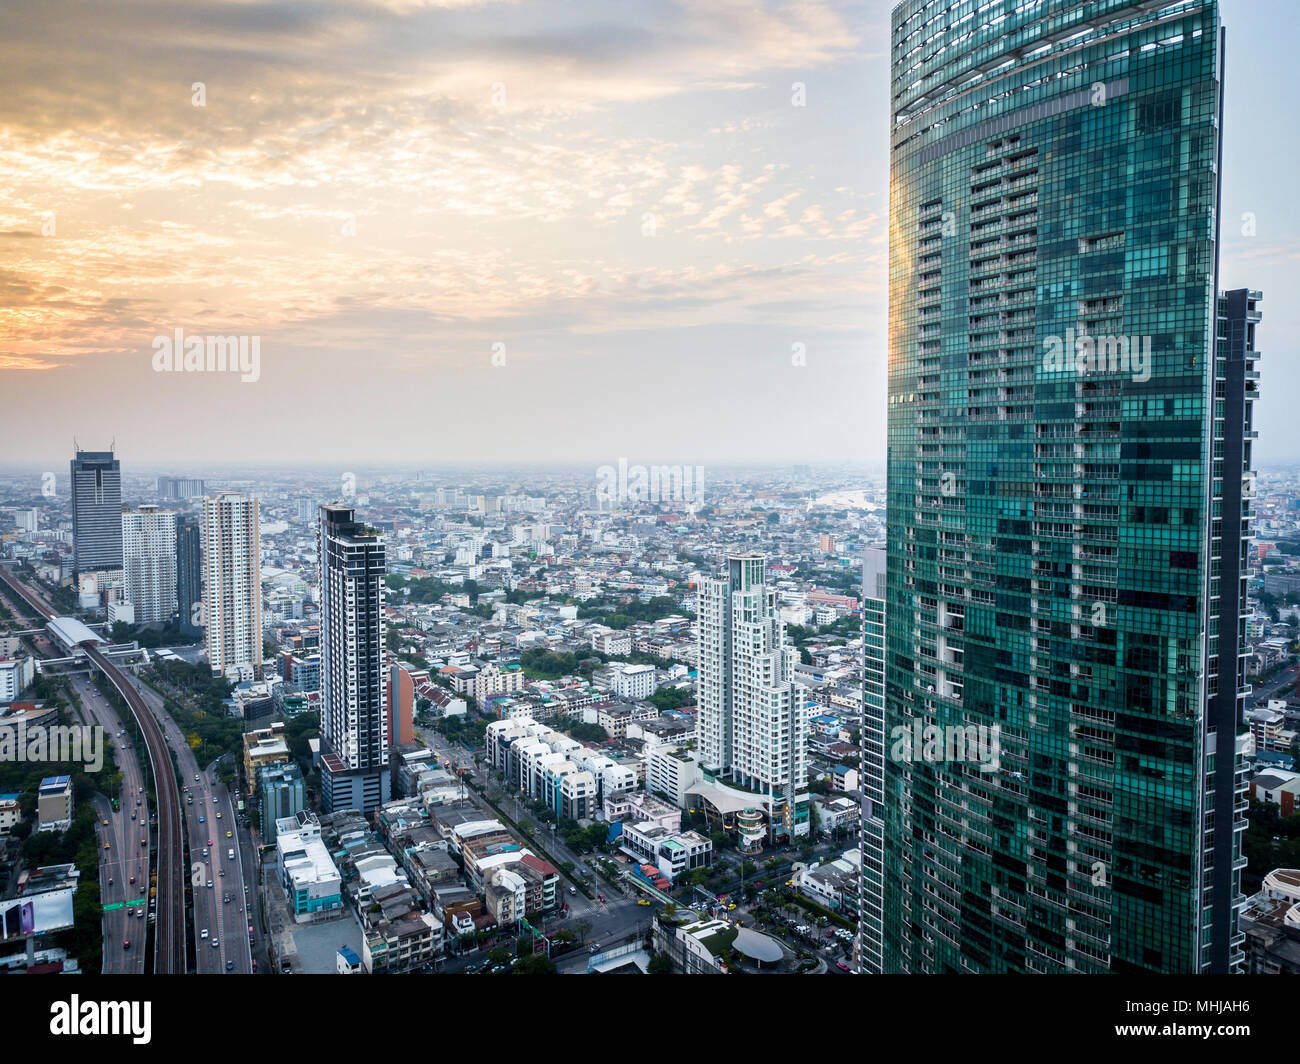 Bangkok capital city of Thailand, drone photograph. Stock Photo